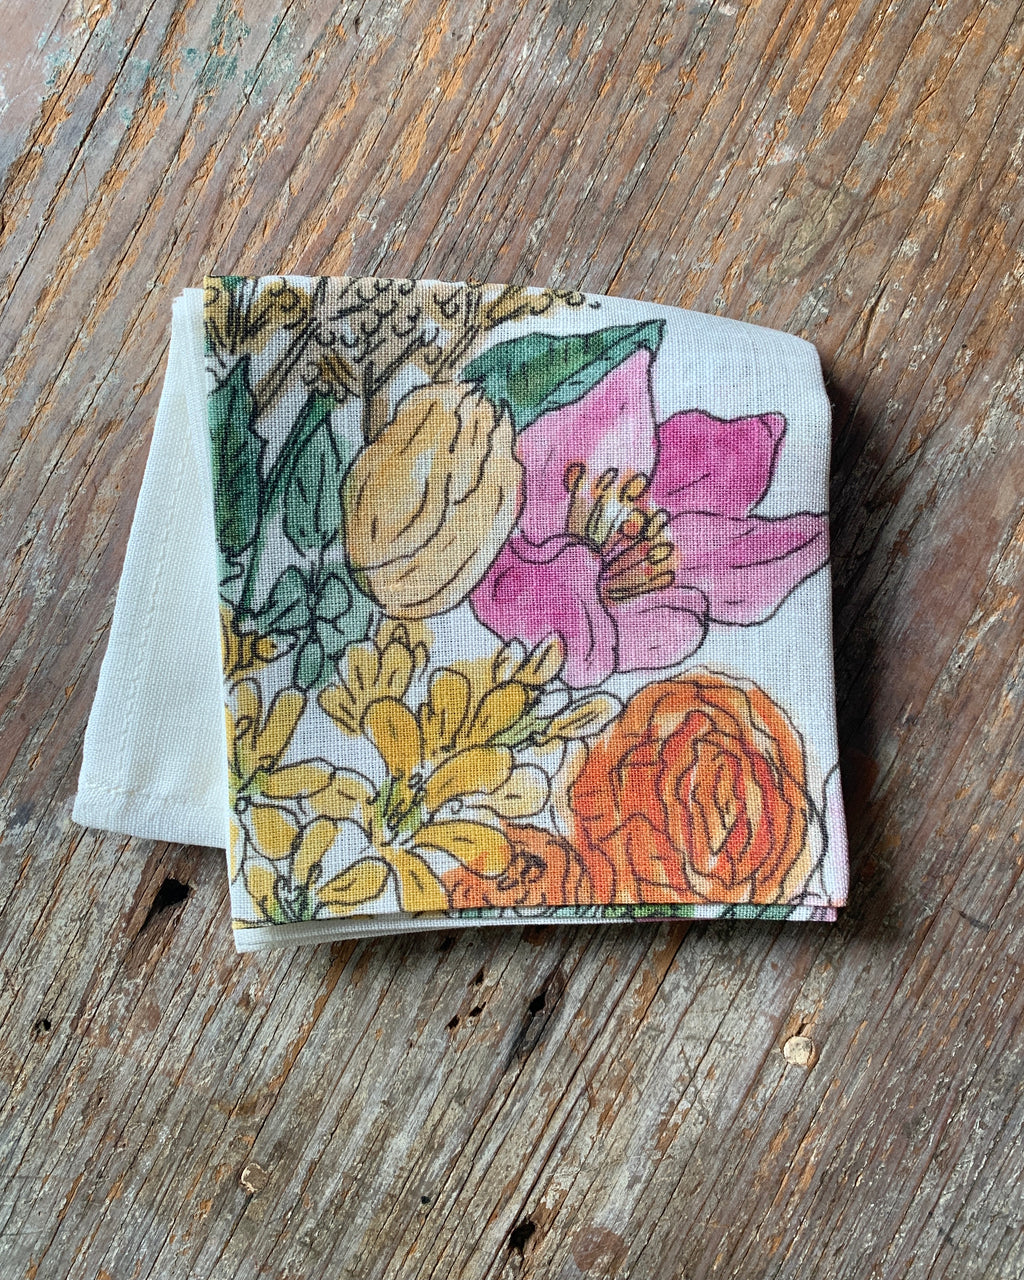 Handkerchief-Isabelle Boinot: Spring Flowers